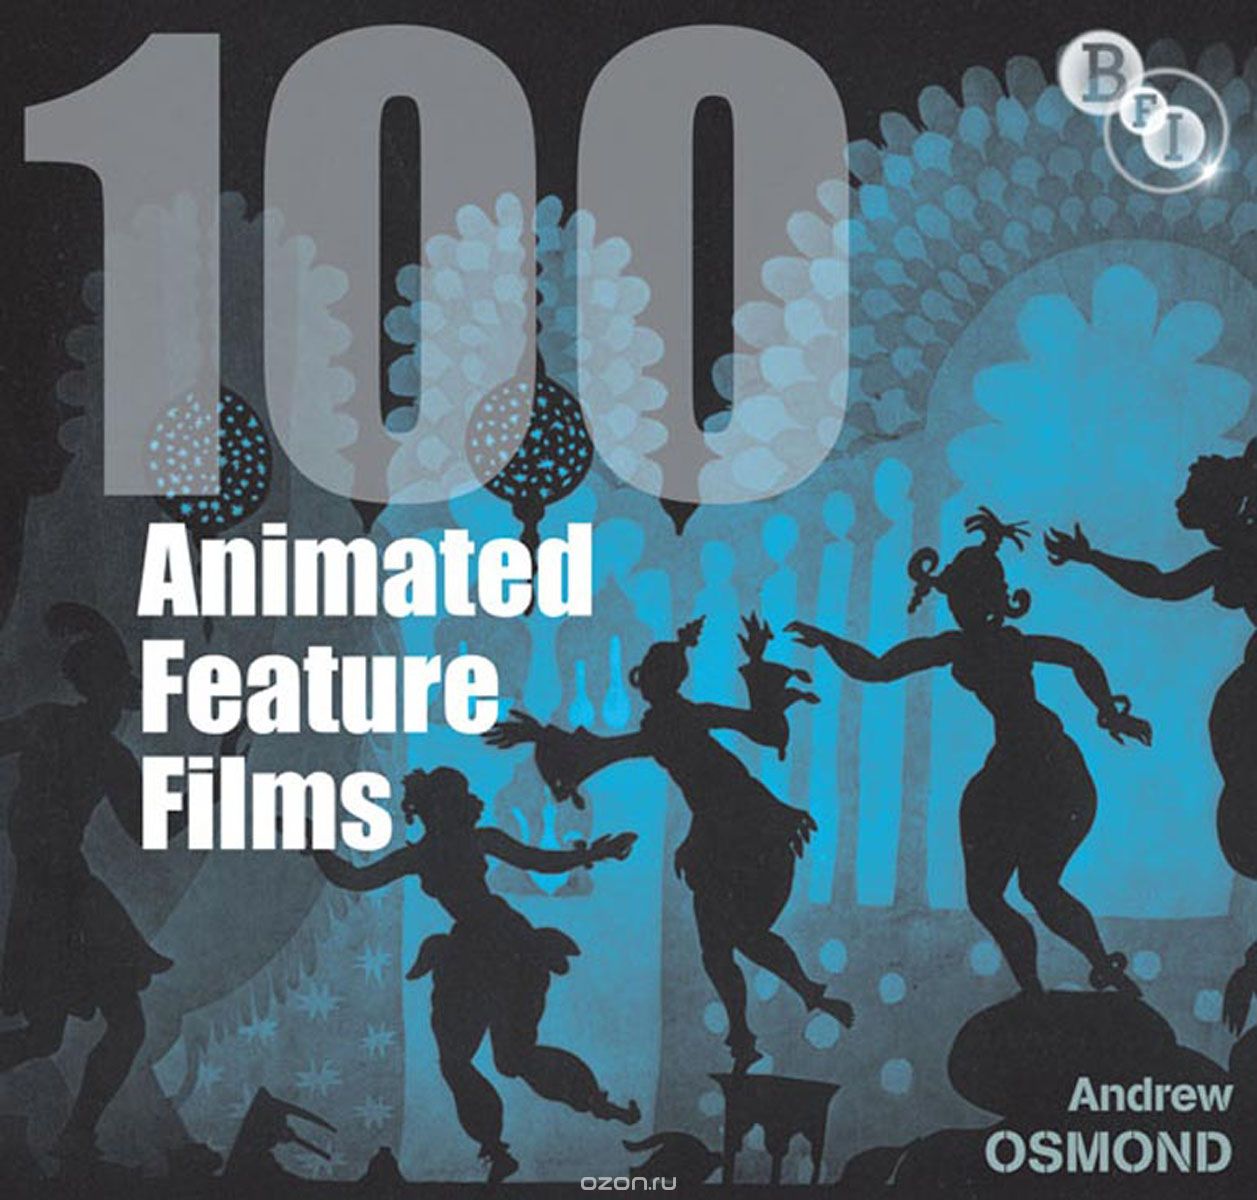 Скачать книгу "100 Animated Feature Films"